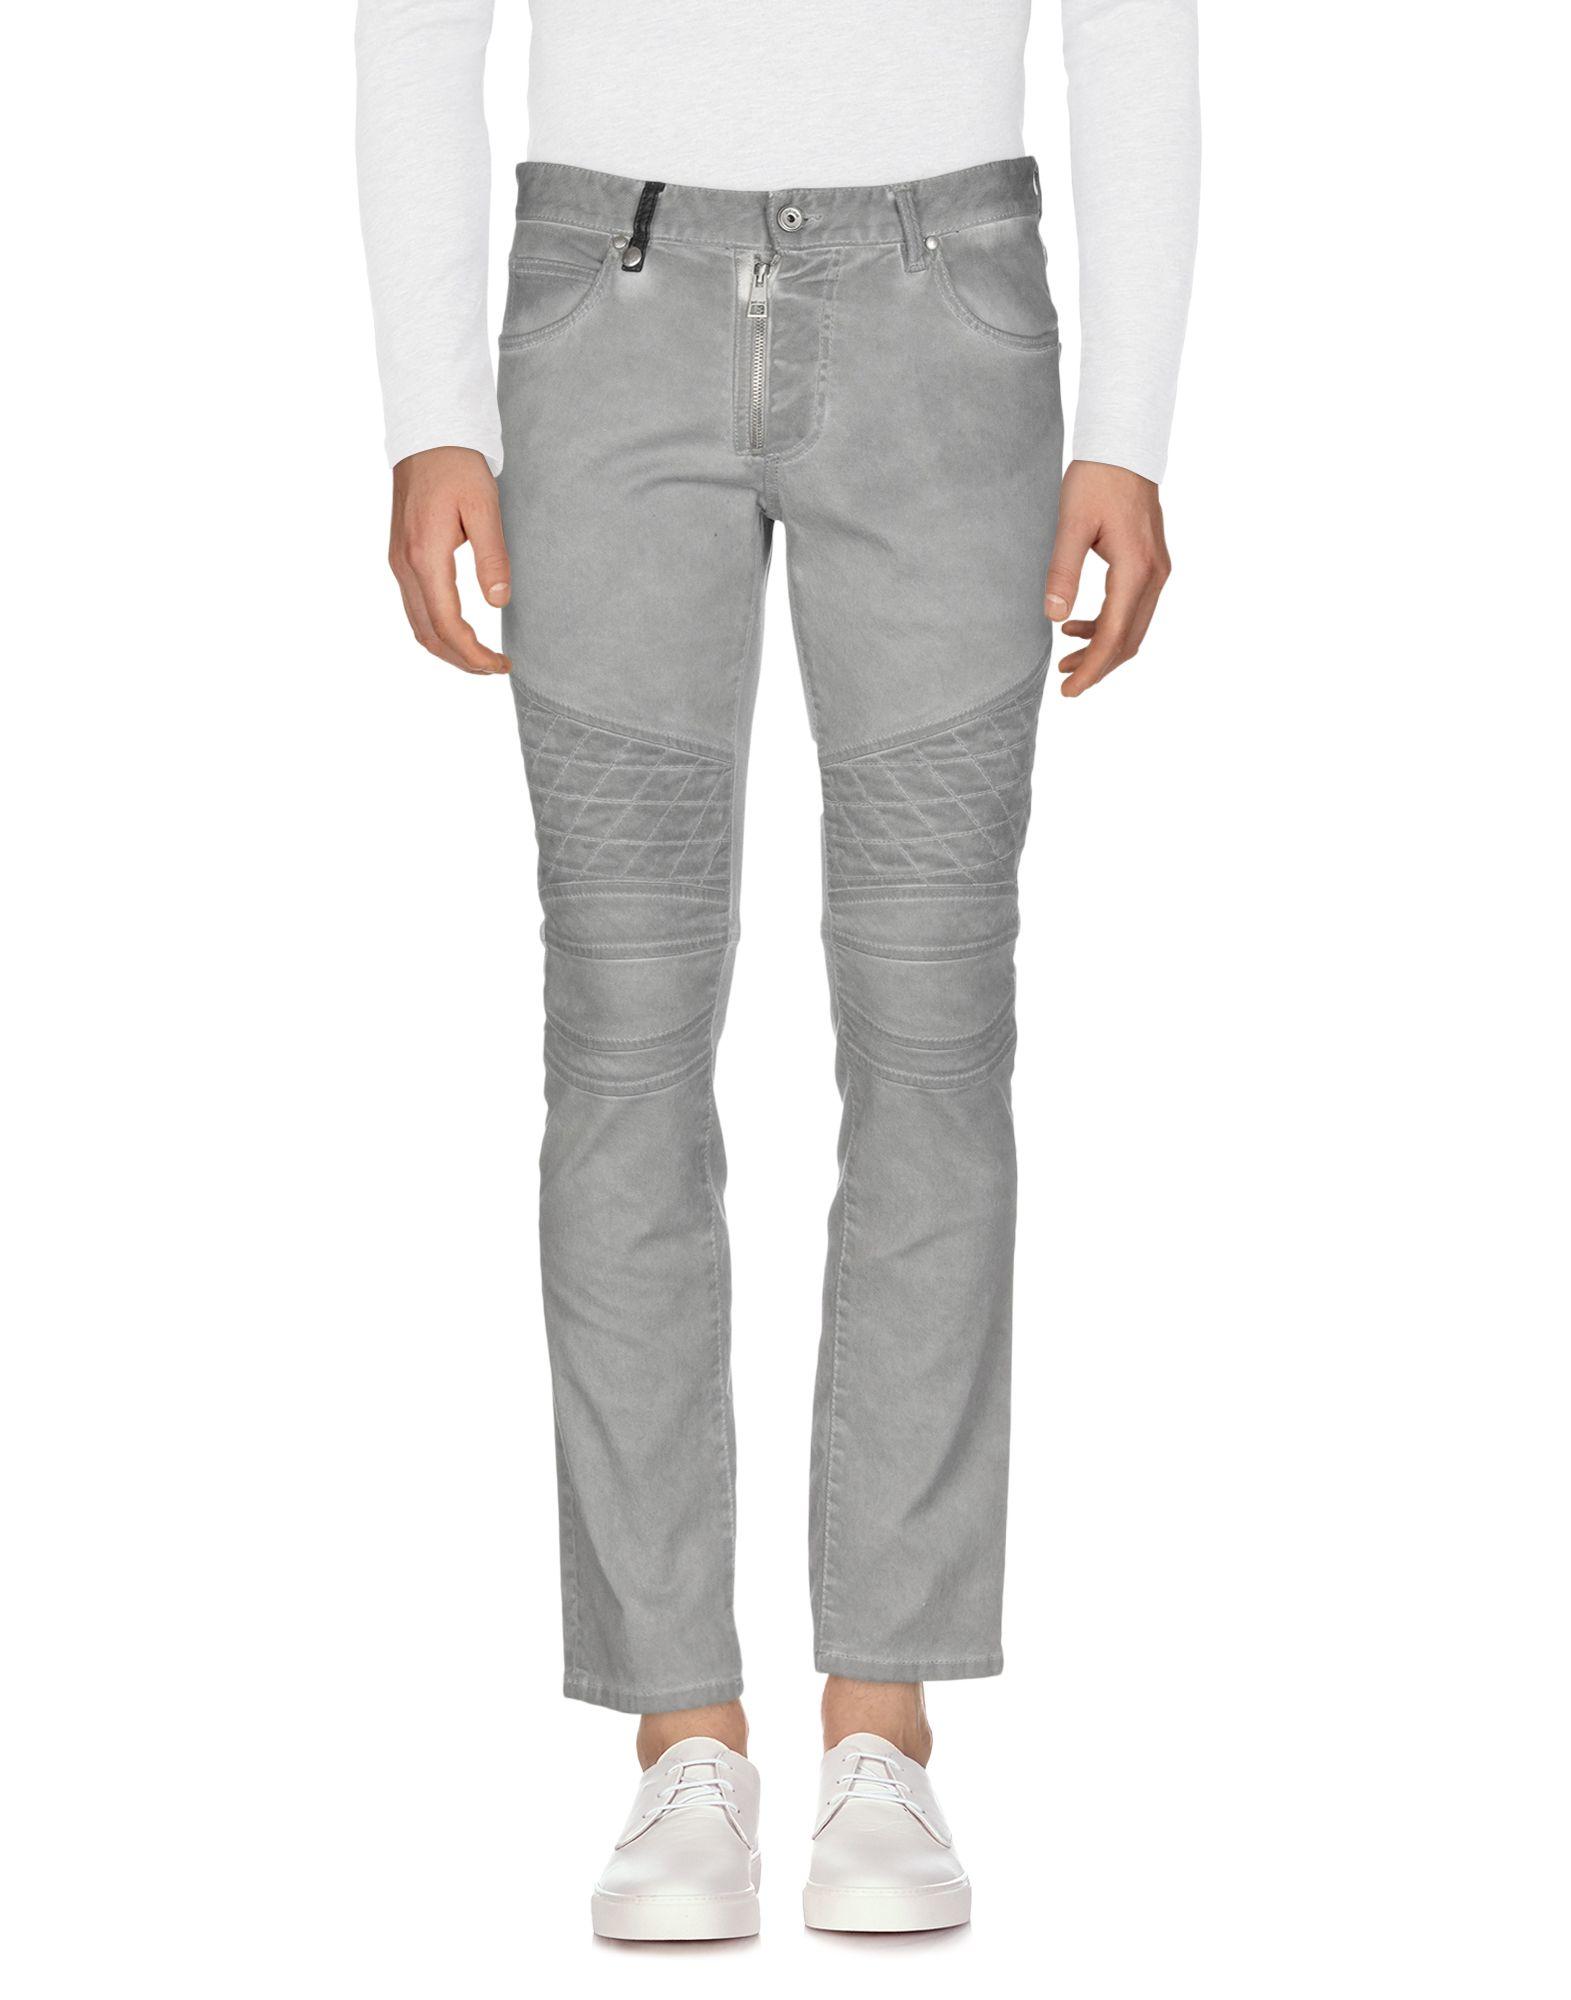 Just Cavalli Denim Trousers in Grey (Gray) for Men - Lyst